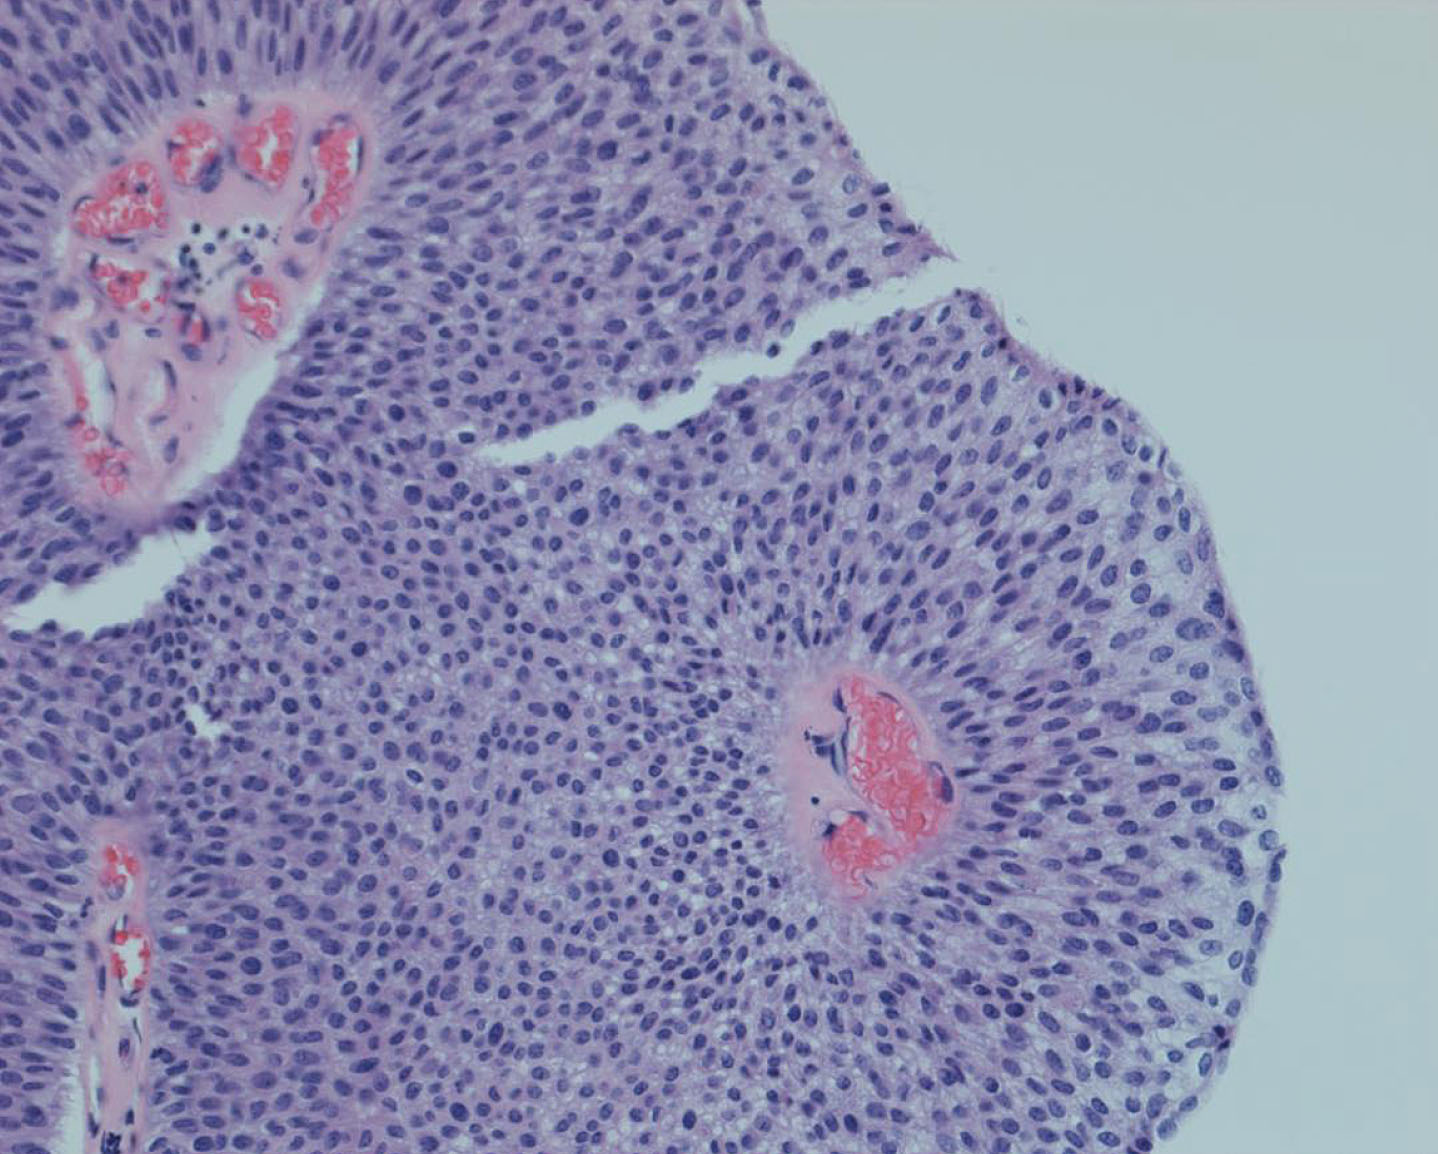 Low grade non invasive papillary urothelial tumor.